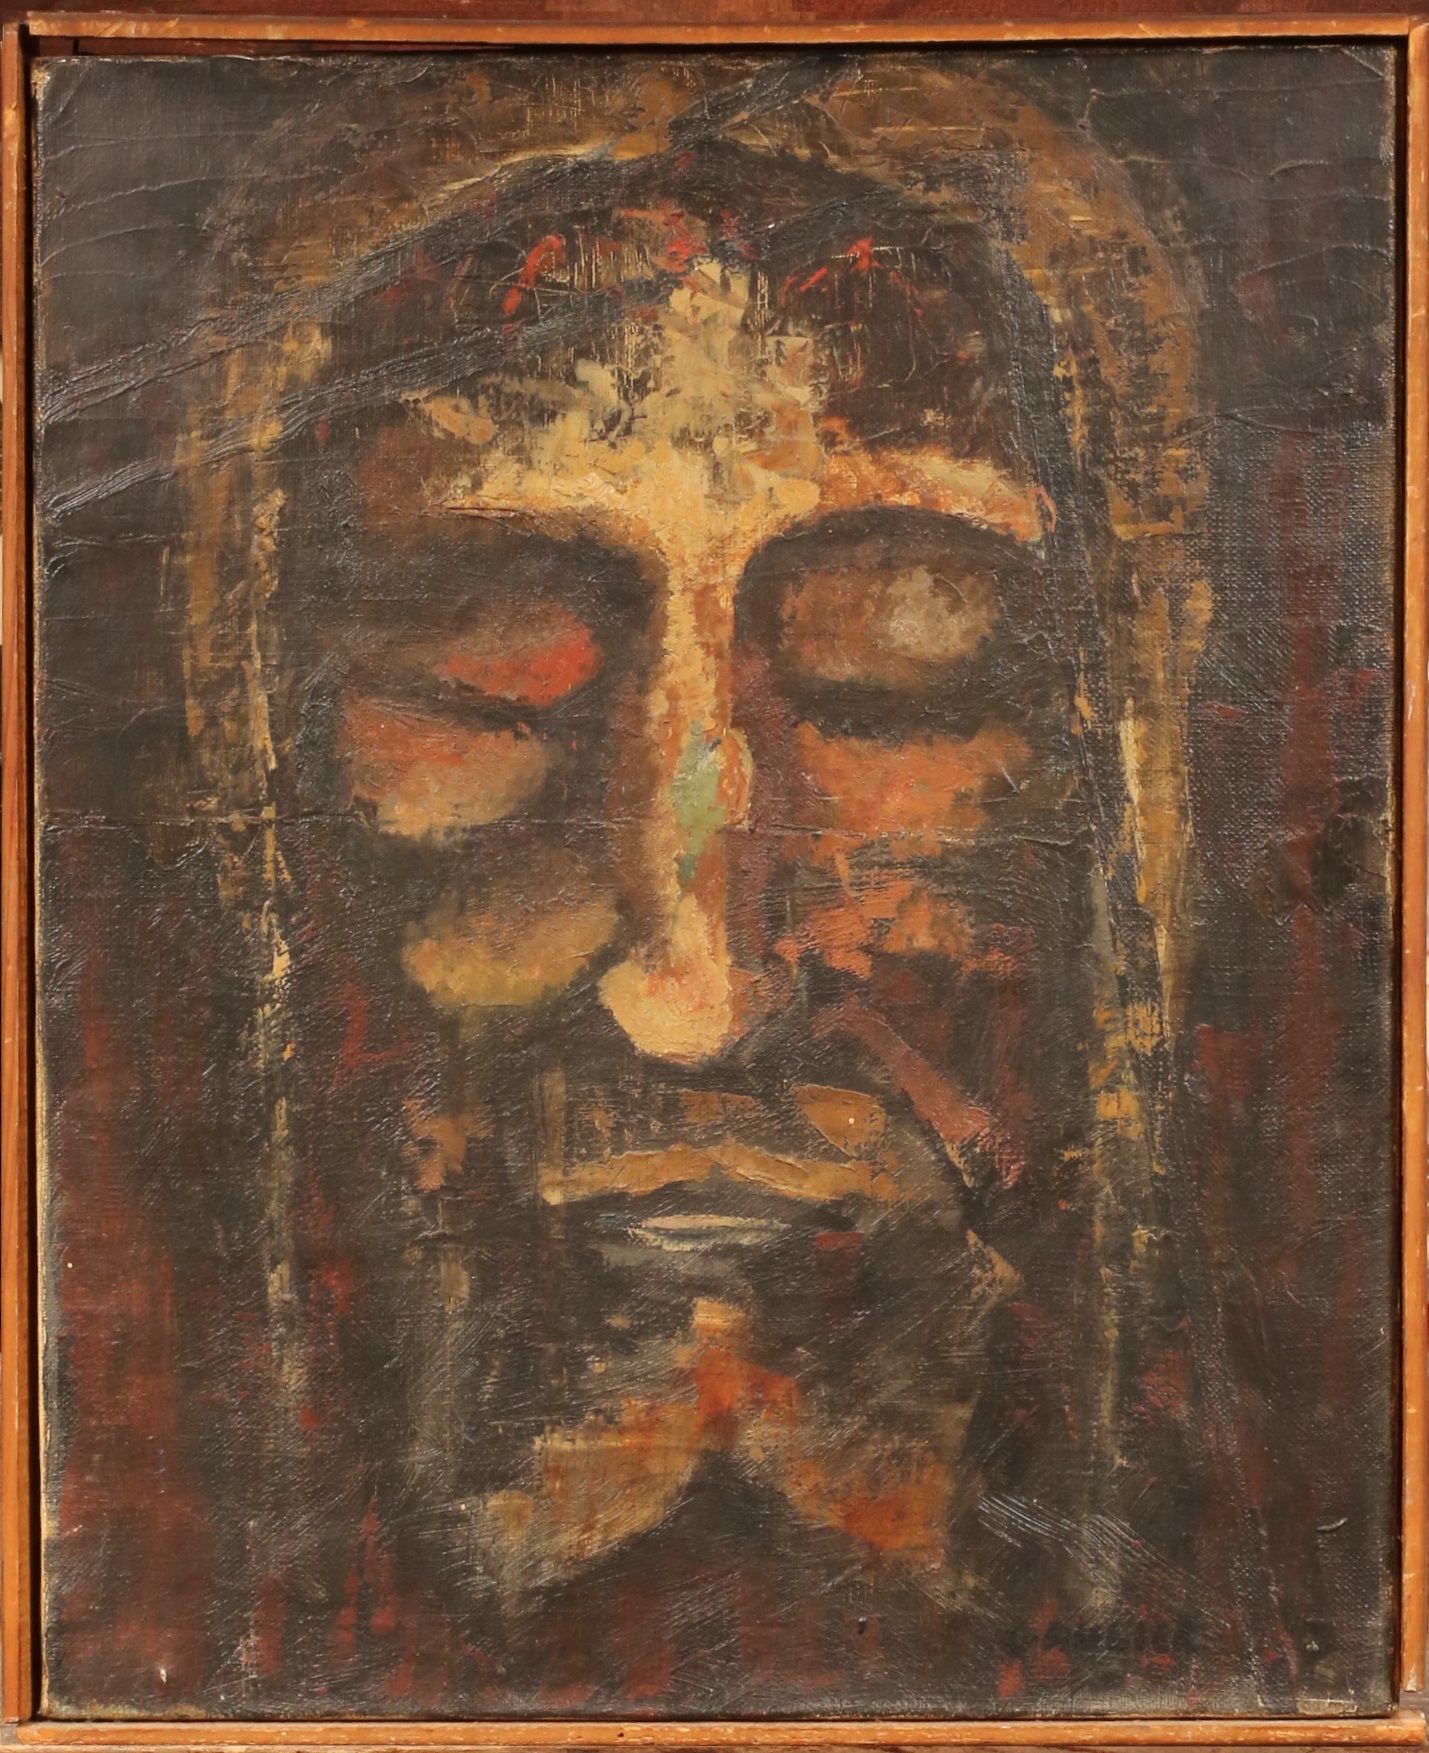 Null 皮埃尔-高利耶（1913-2008）
肿胀的基督
布面油画 
印第安人沙龙, 1951年
41 x 33厘米